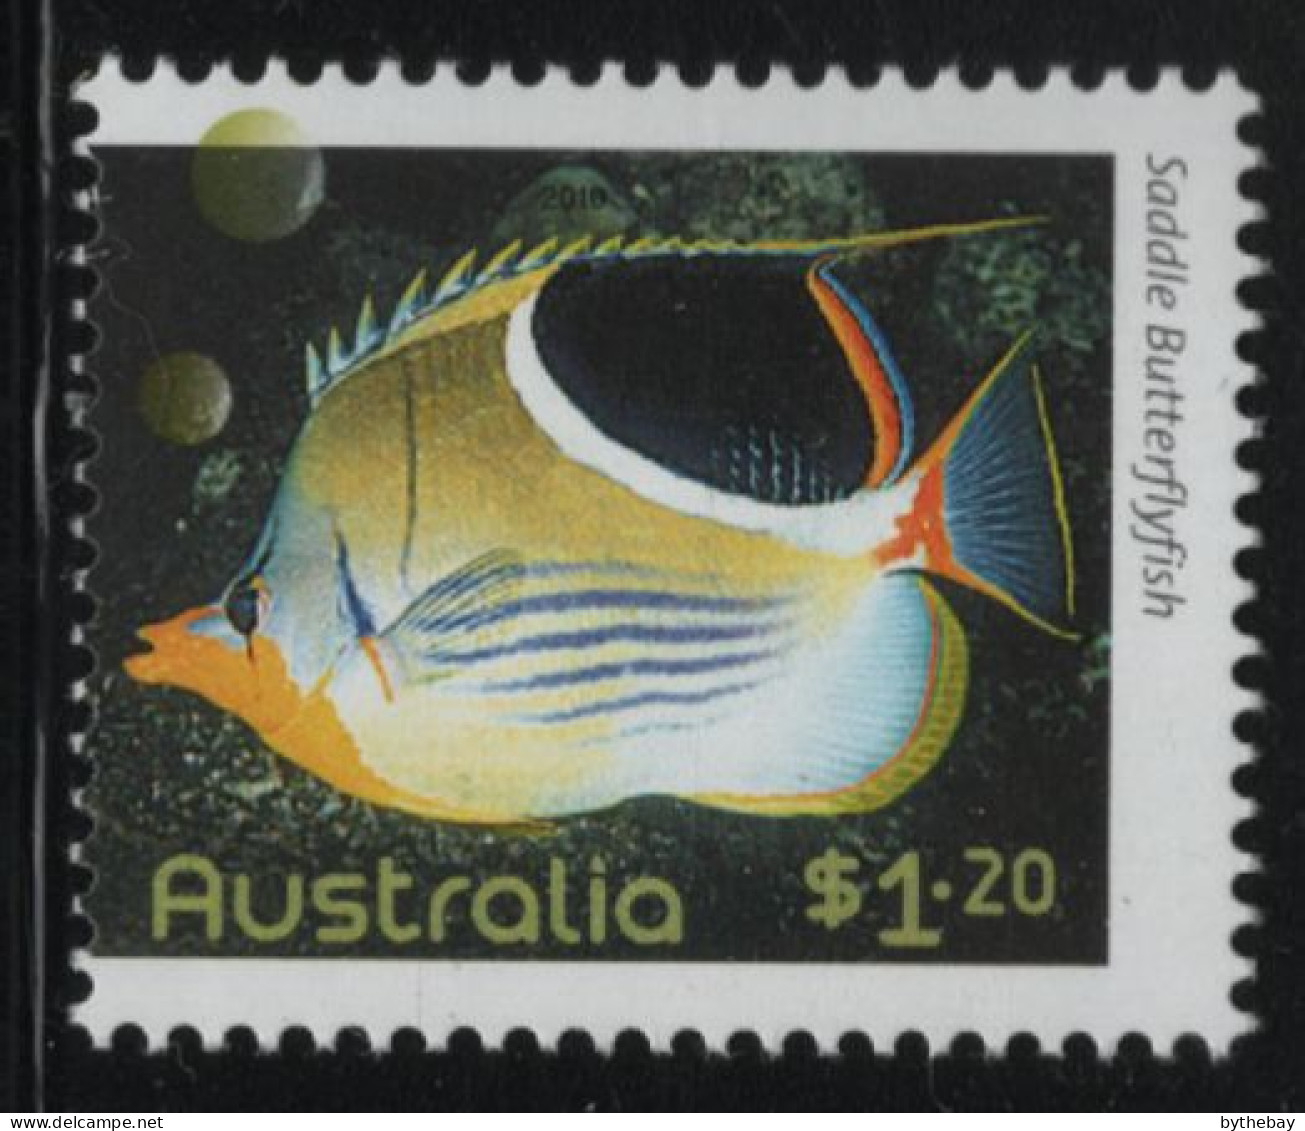 Australia 2010 MNH Sc 3275 $1.20 Saddle Butterflyfish - Mint Stamps